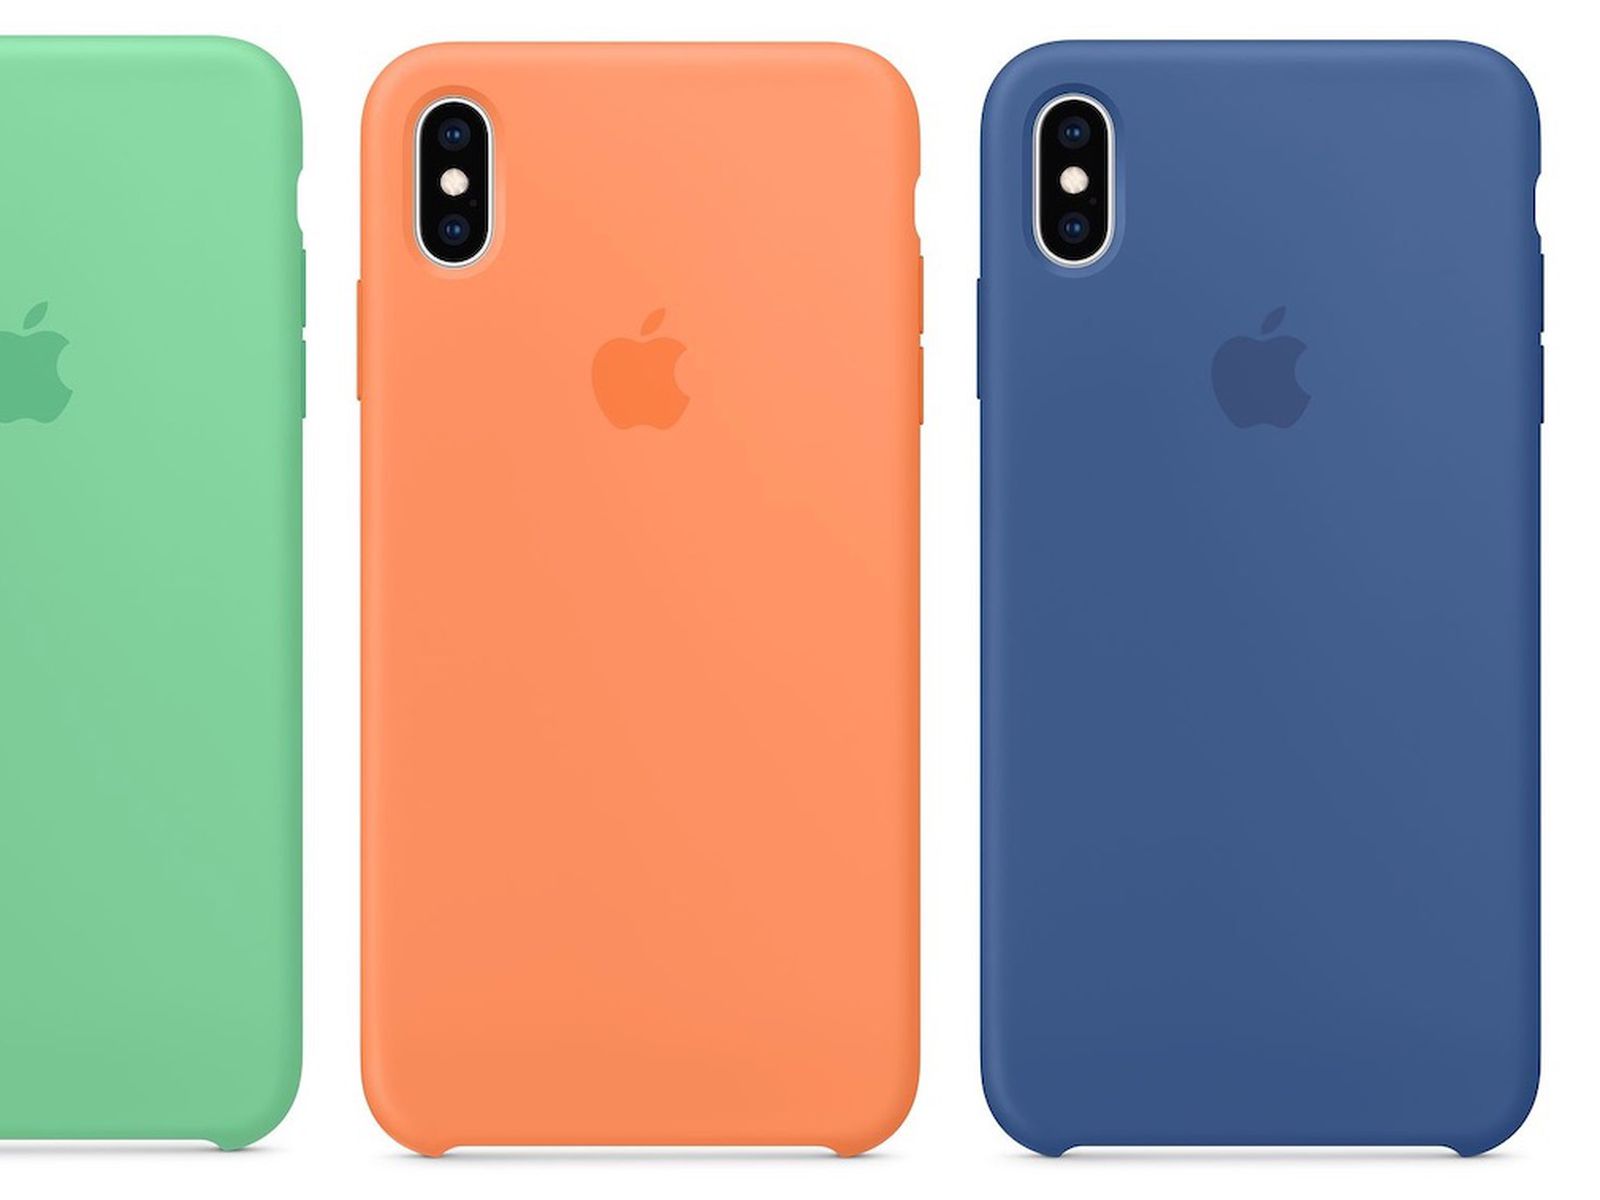 new iphone cases